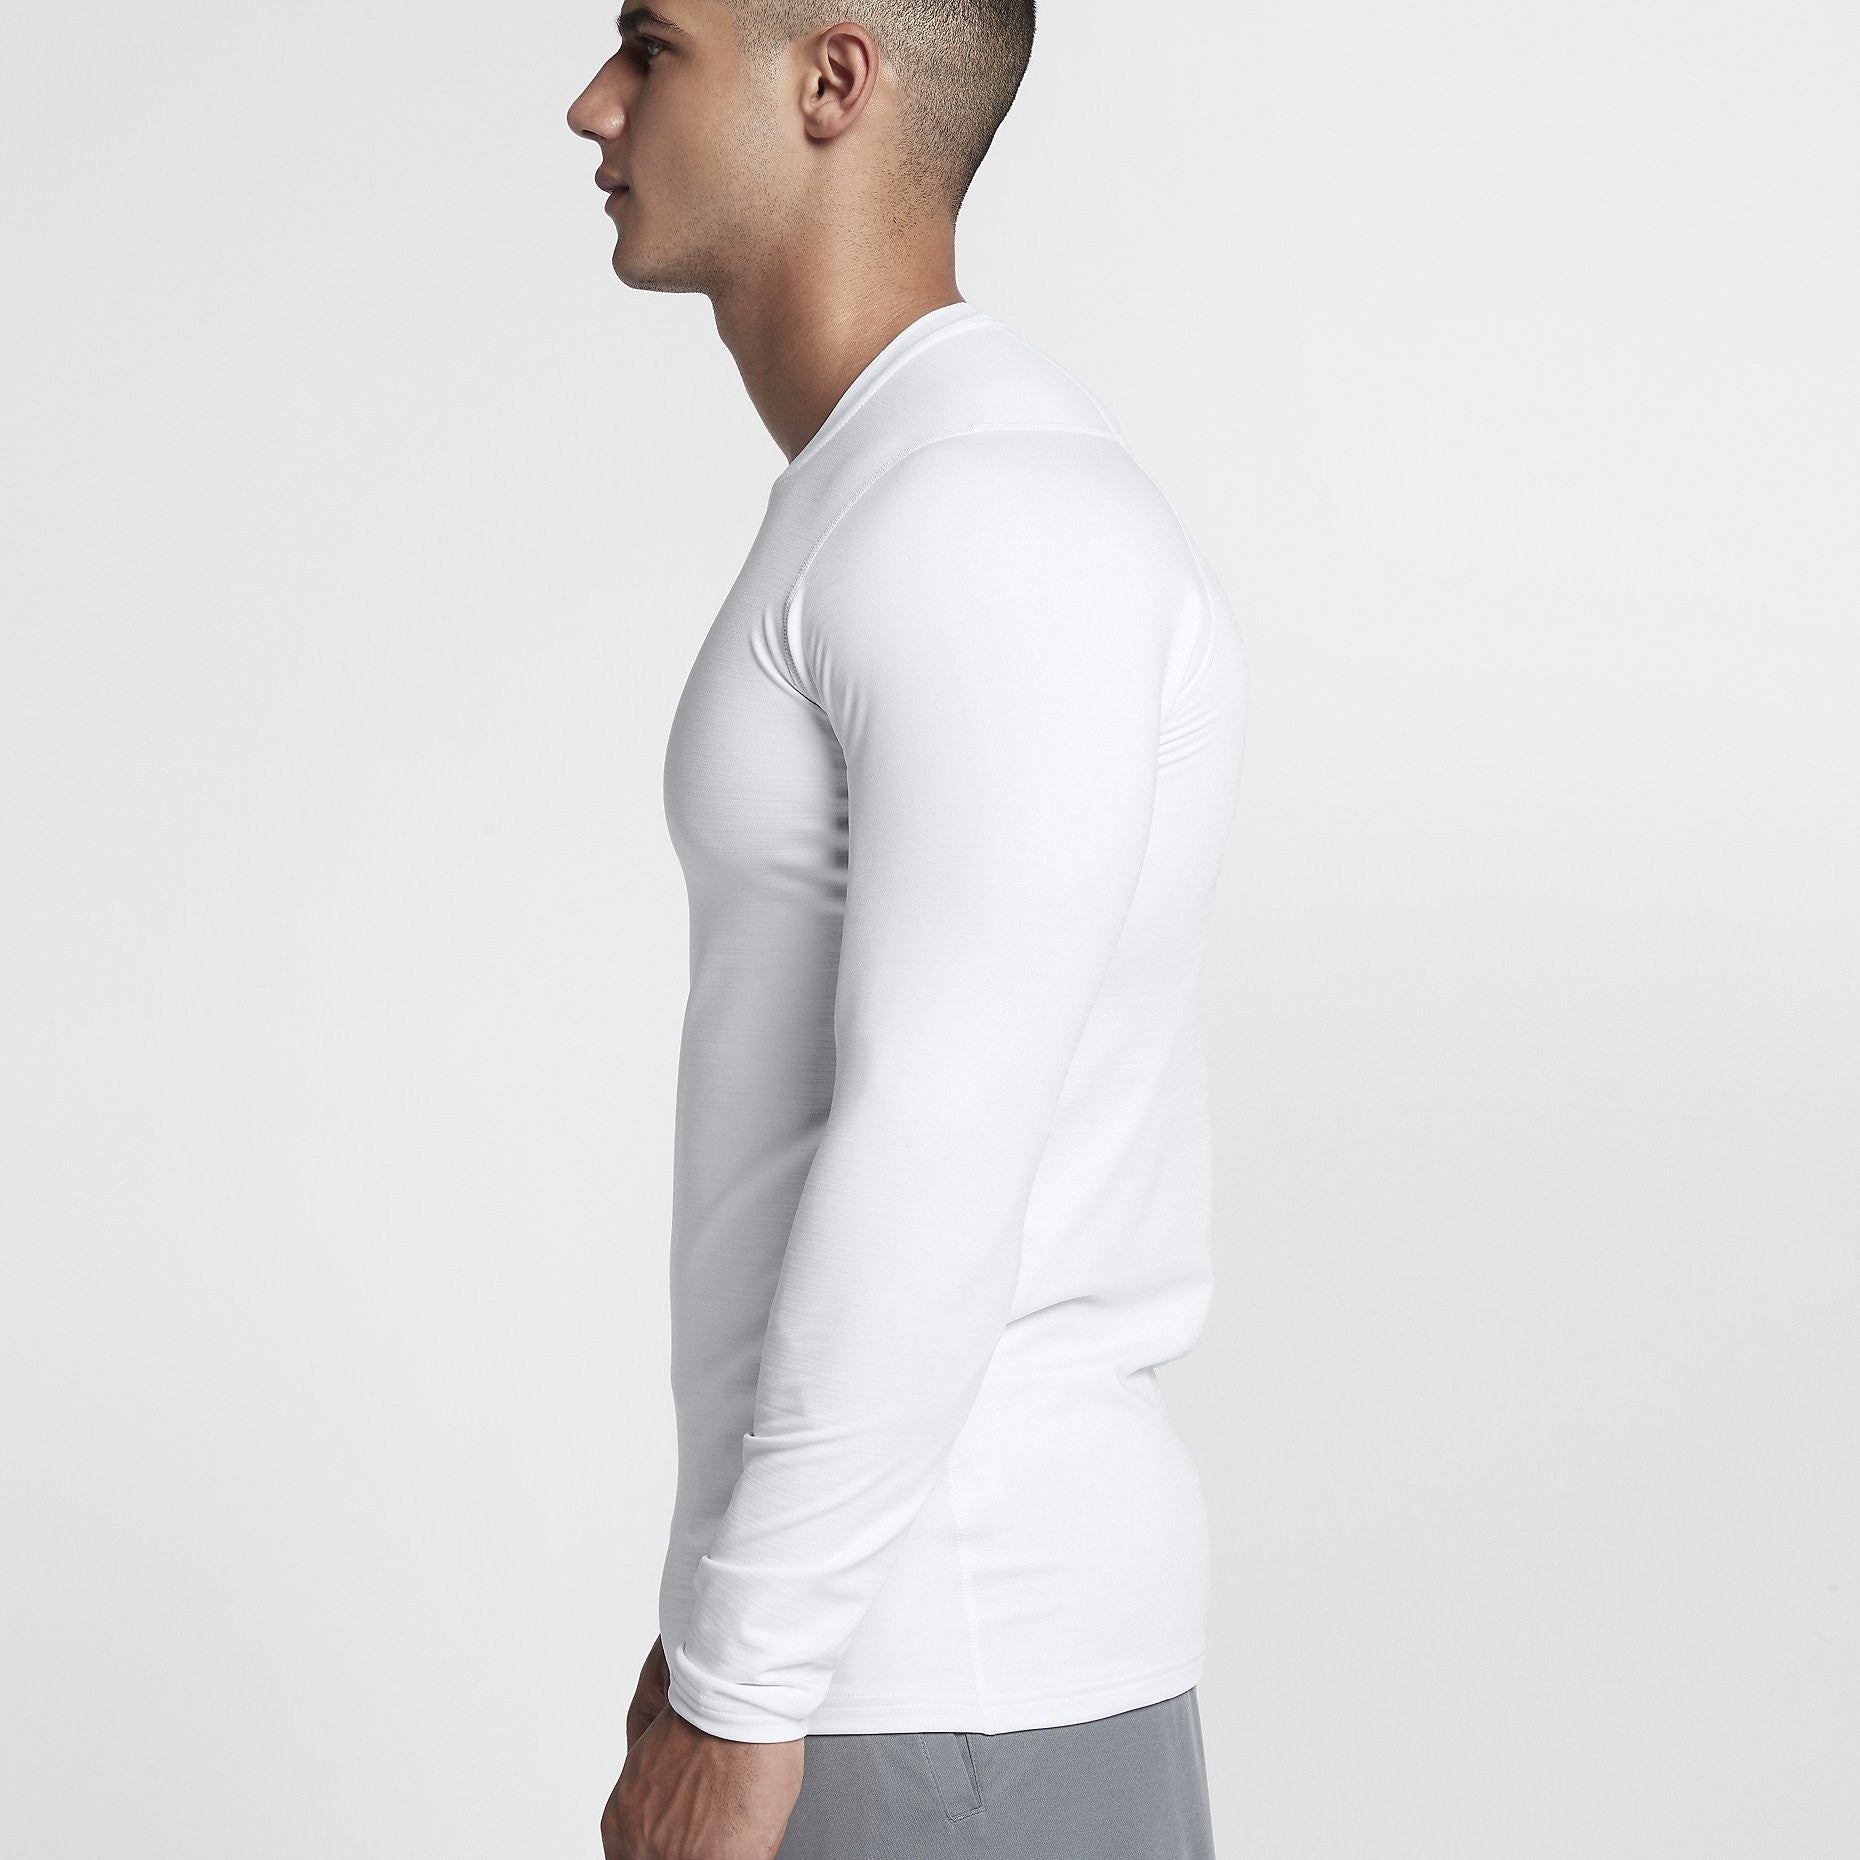 Nike Pro Warm Mens Long Sleeve Top - White